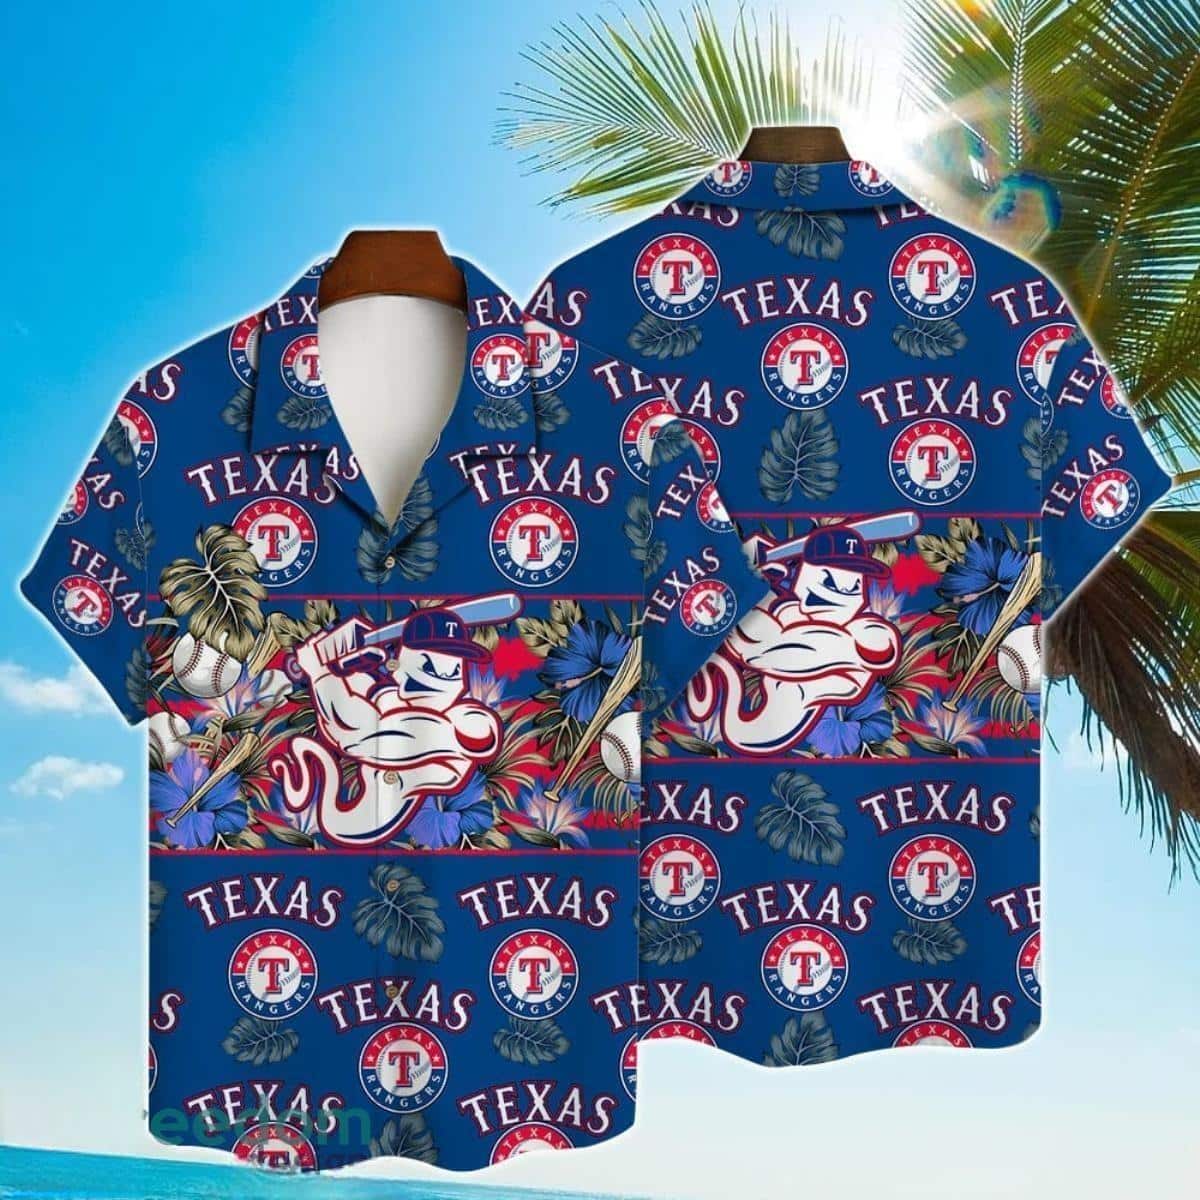 Texas Rangers MLB Hawaiian Shirt Trending For This Summer